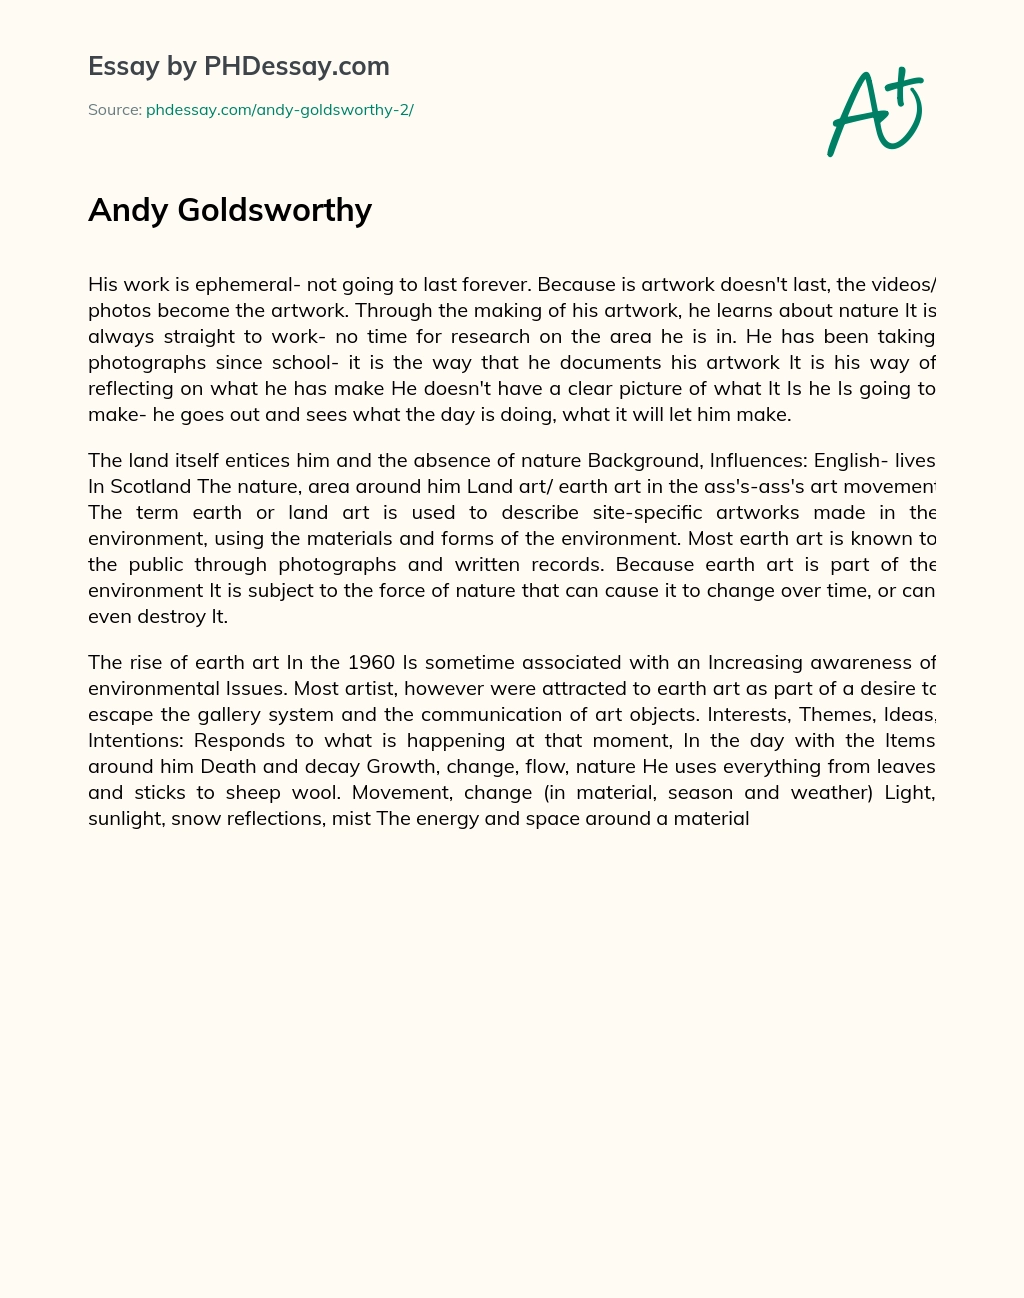 Andy Goldsworthy essay